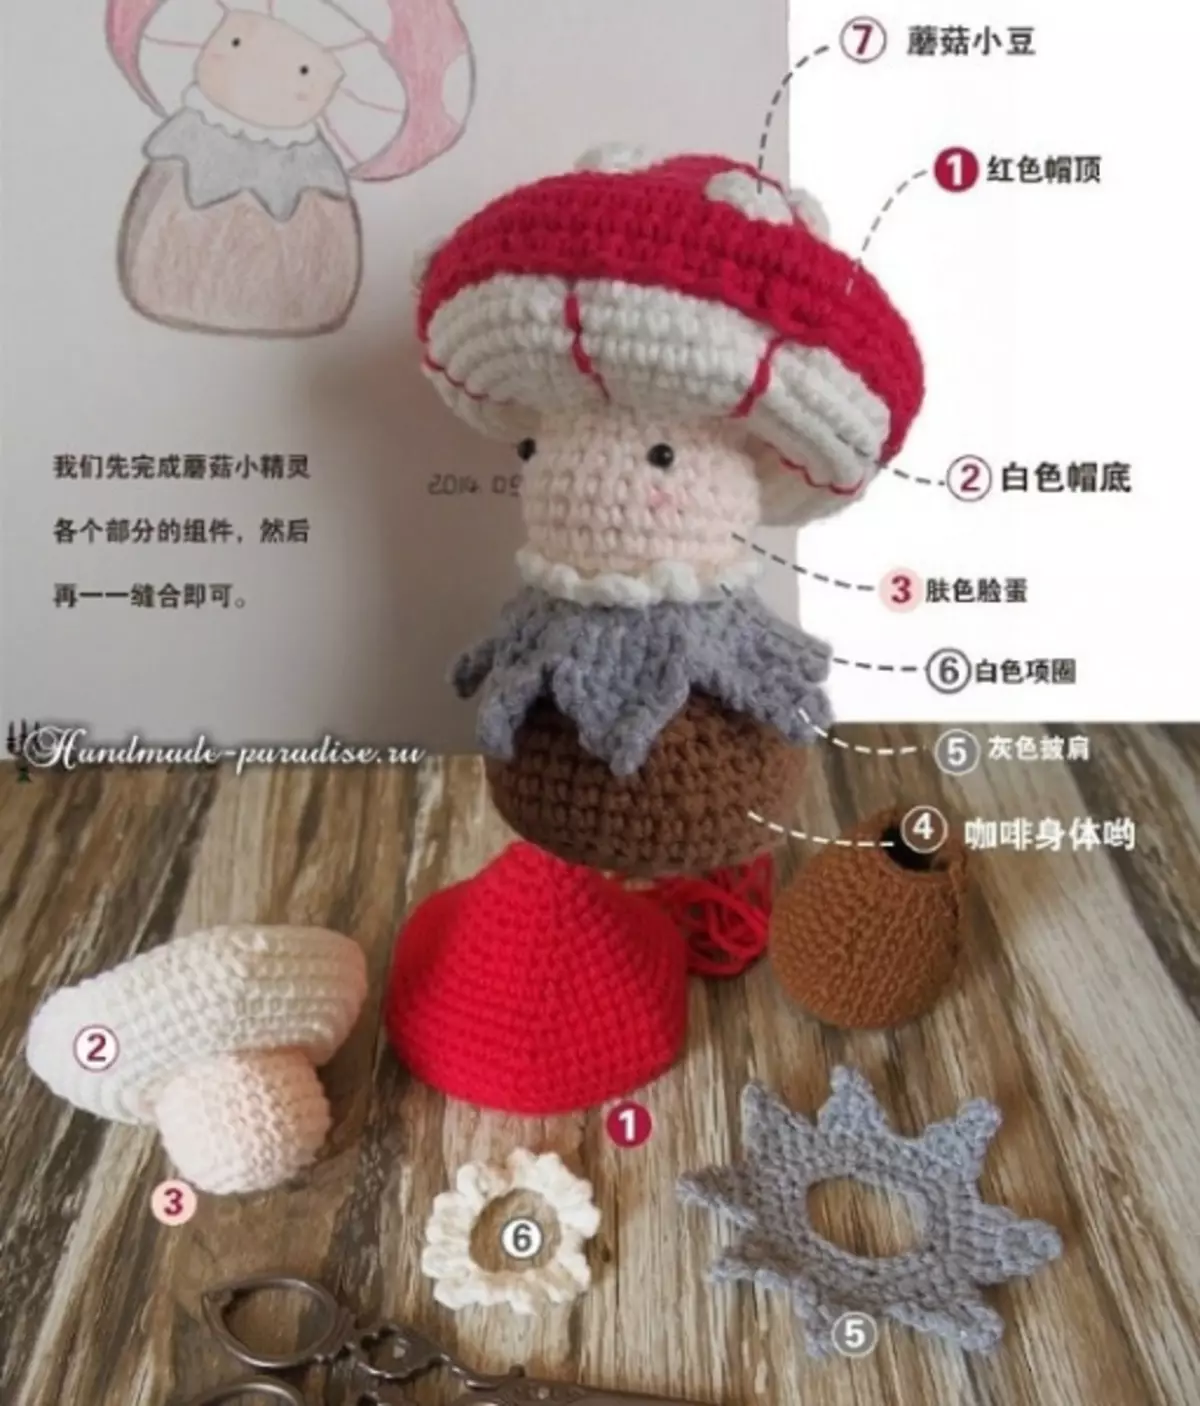 Huba huby. Knit Crochet Amigurumi